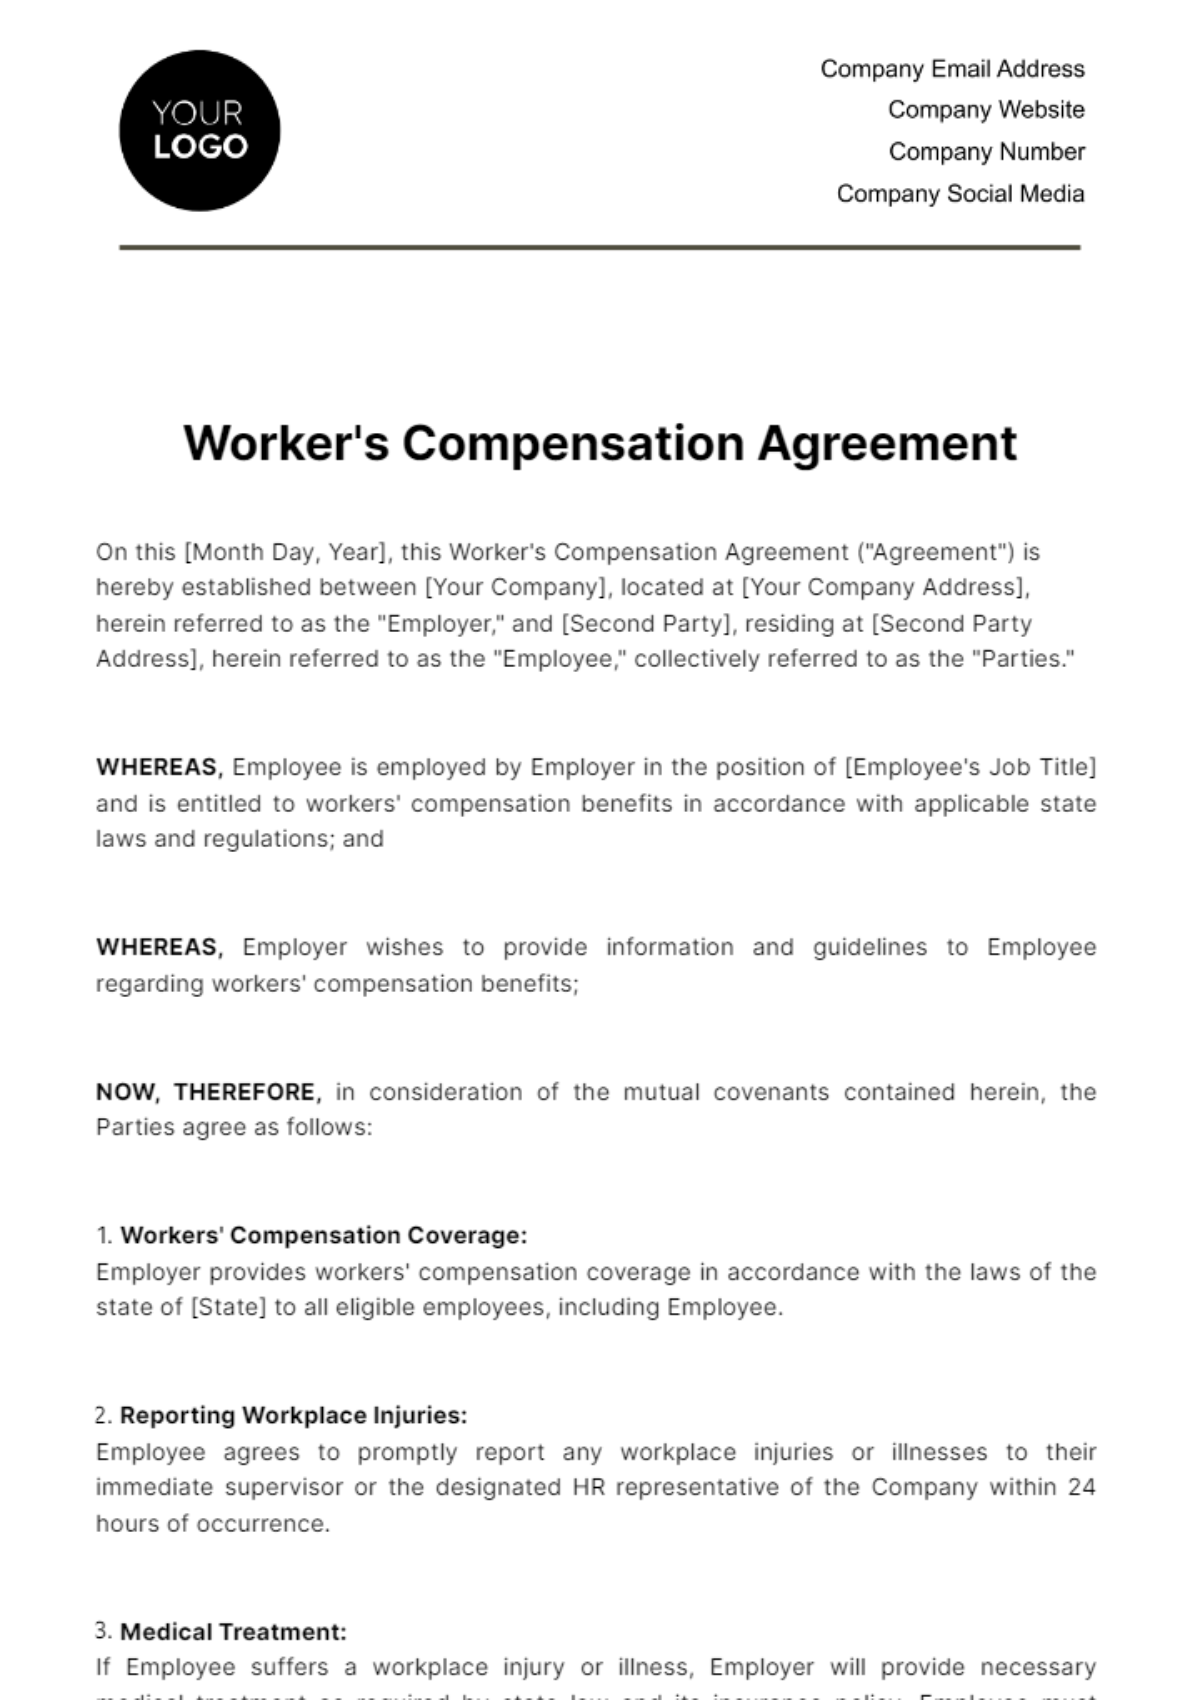 Worker's Compensation Agreement HR Template